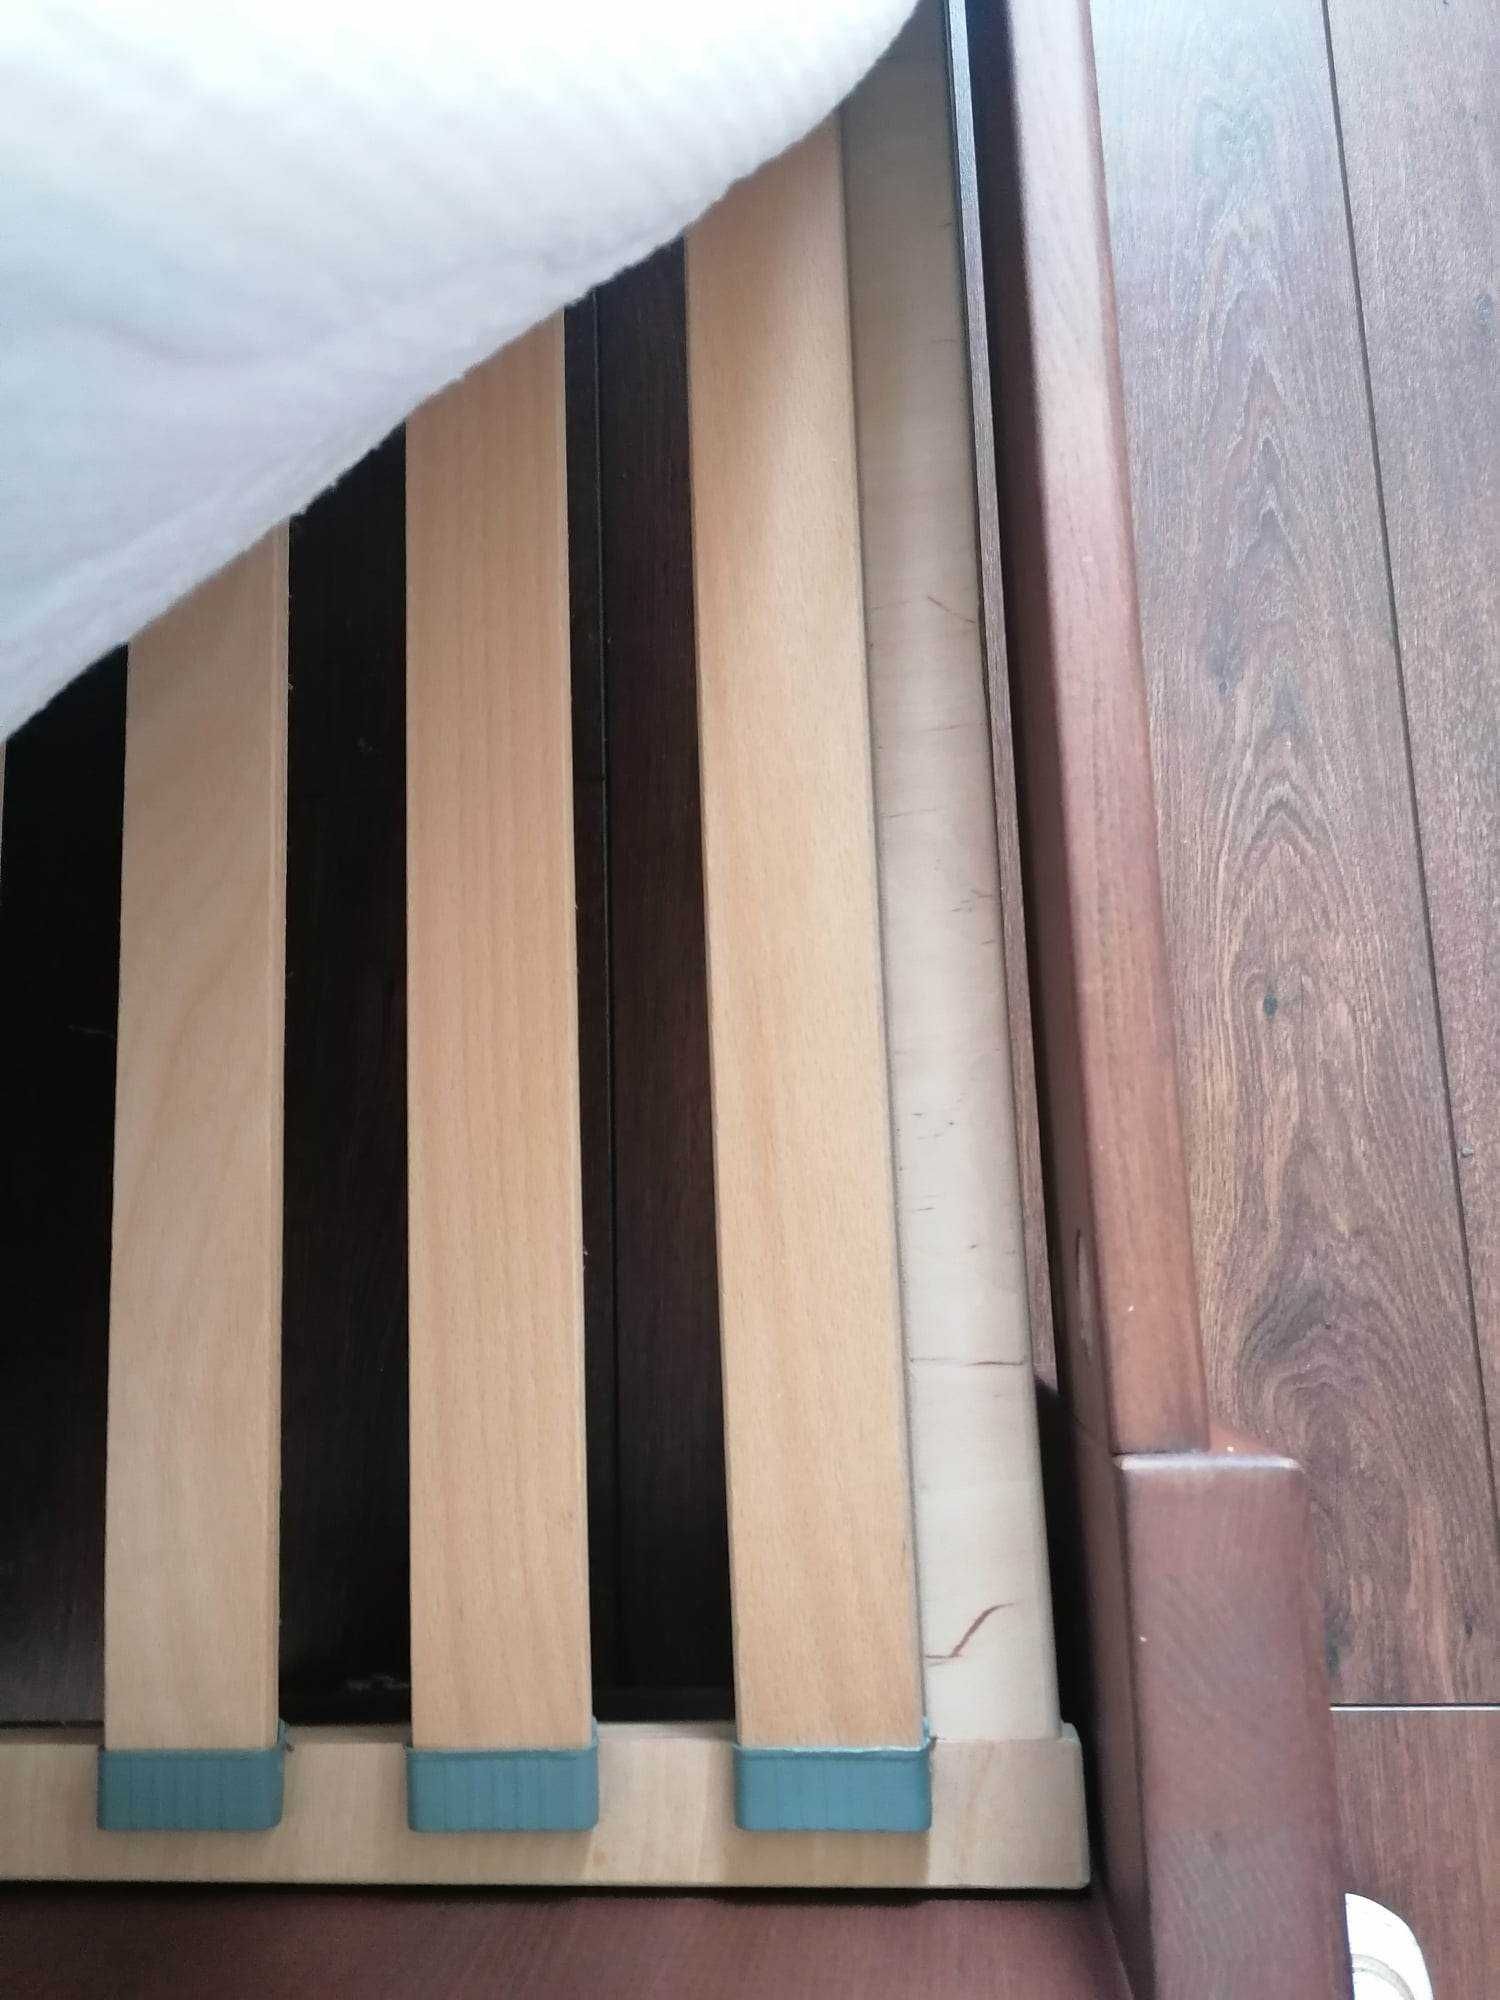 Łóżko 180x200 drewniane BENITO 335 ARBORA plus szafki